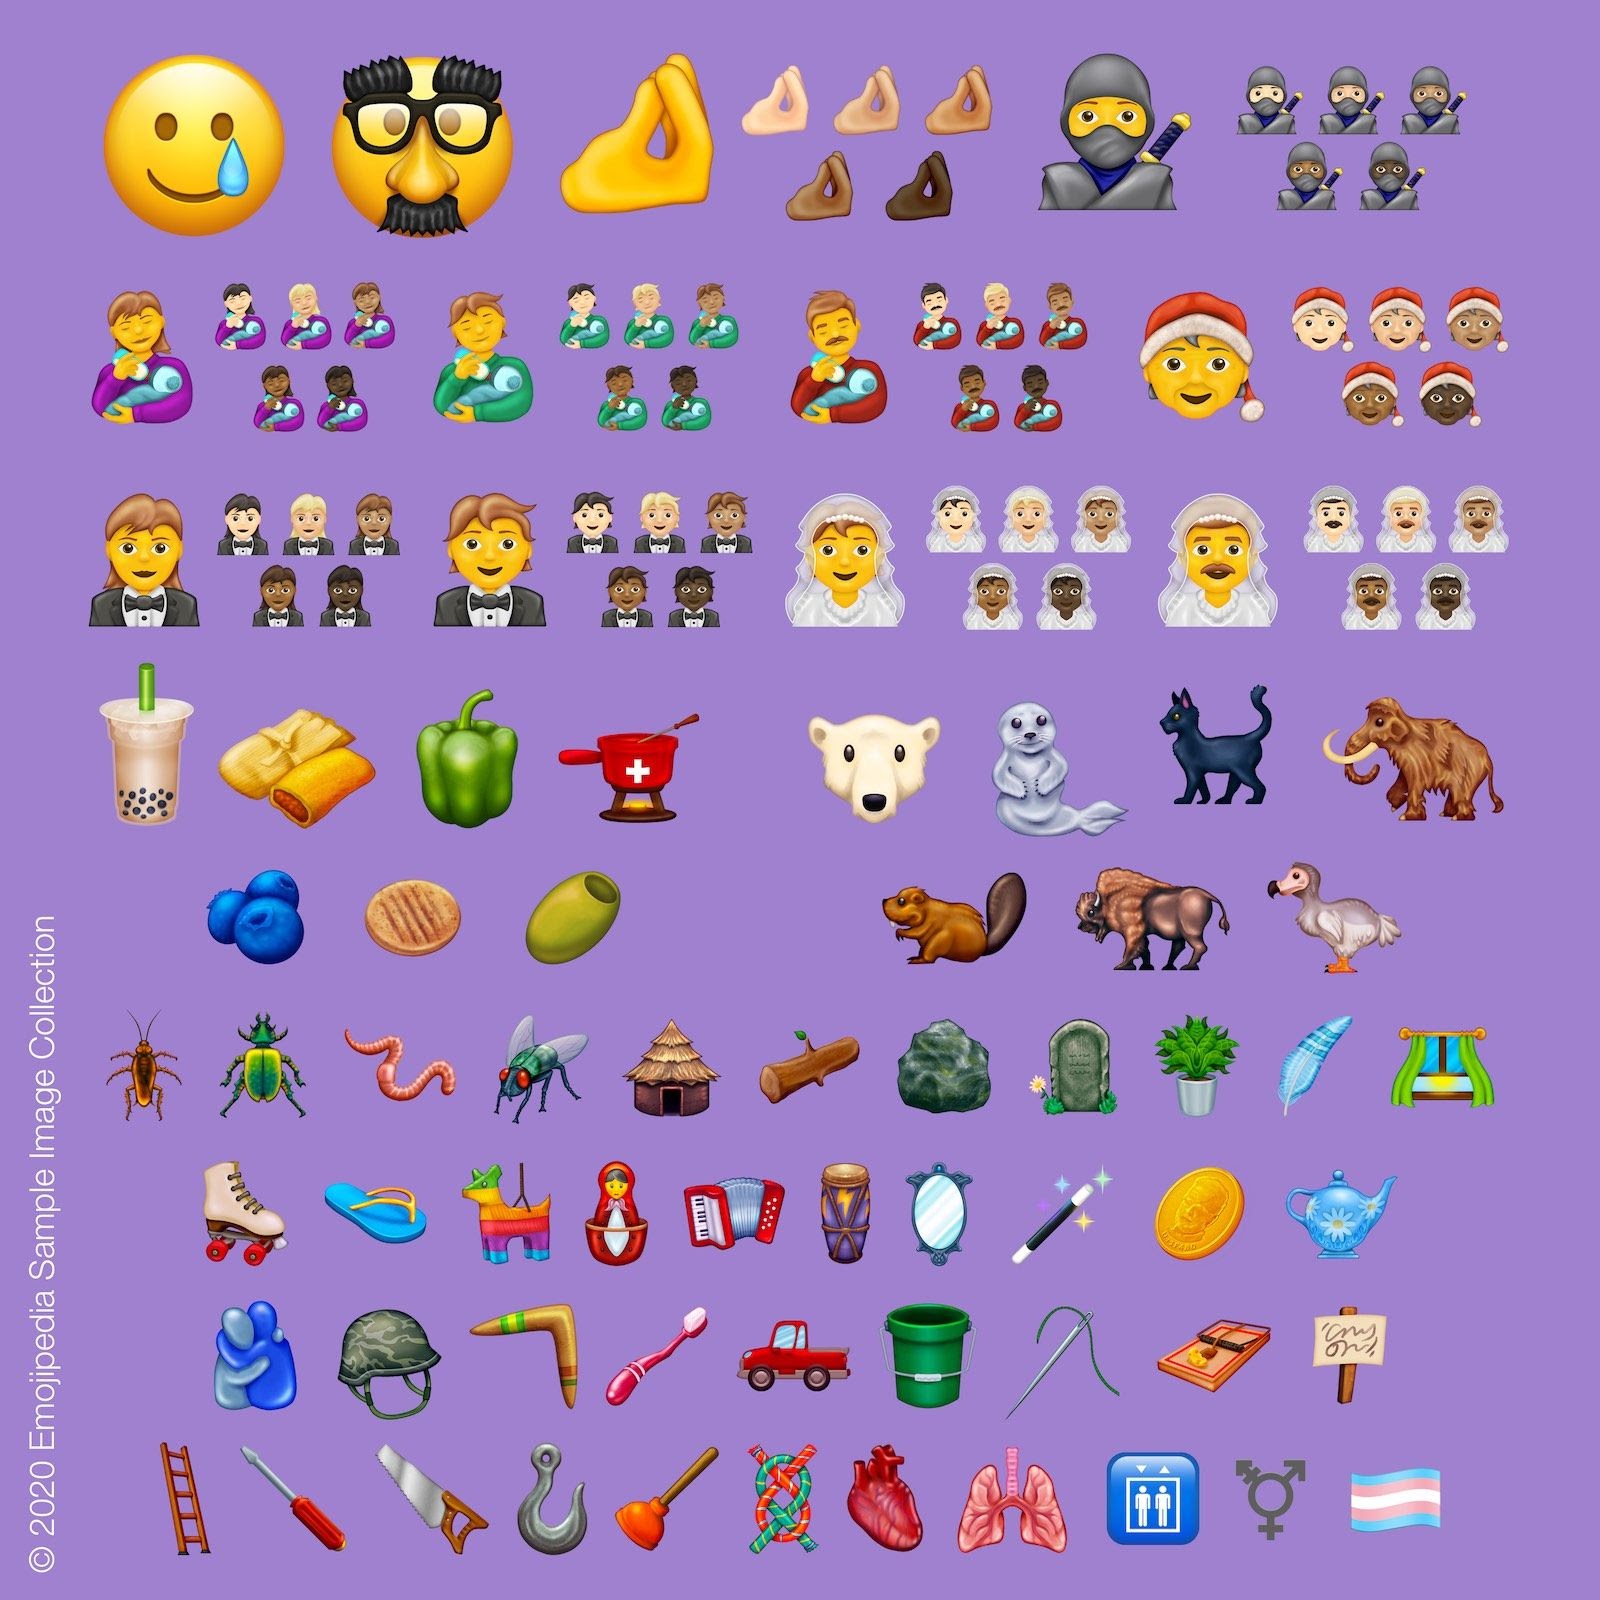 novos emojis 2020